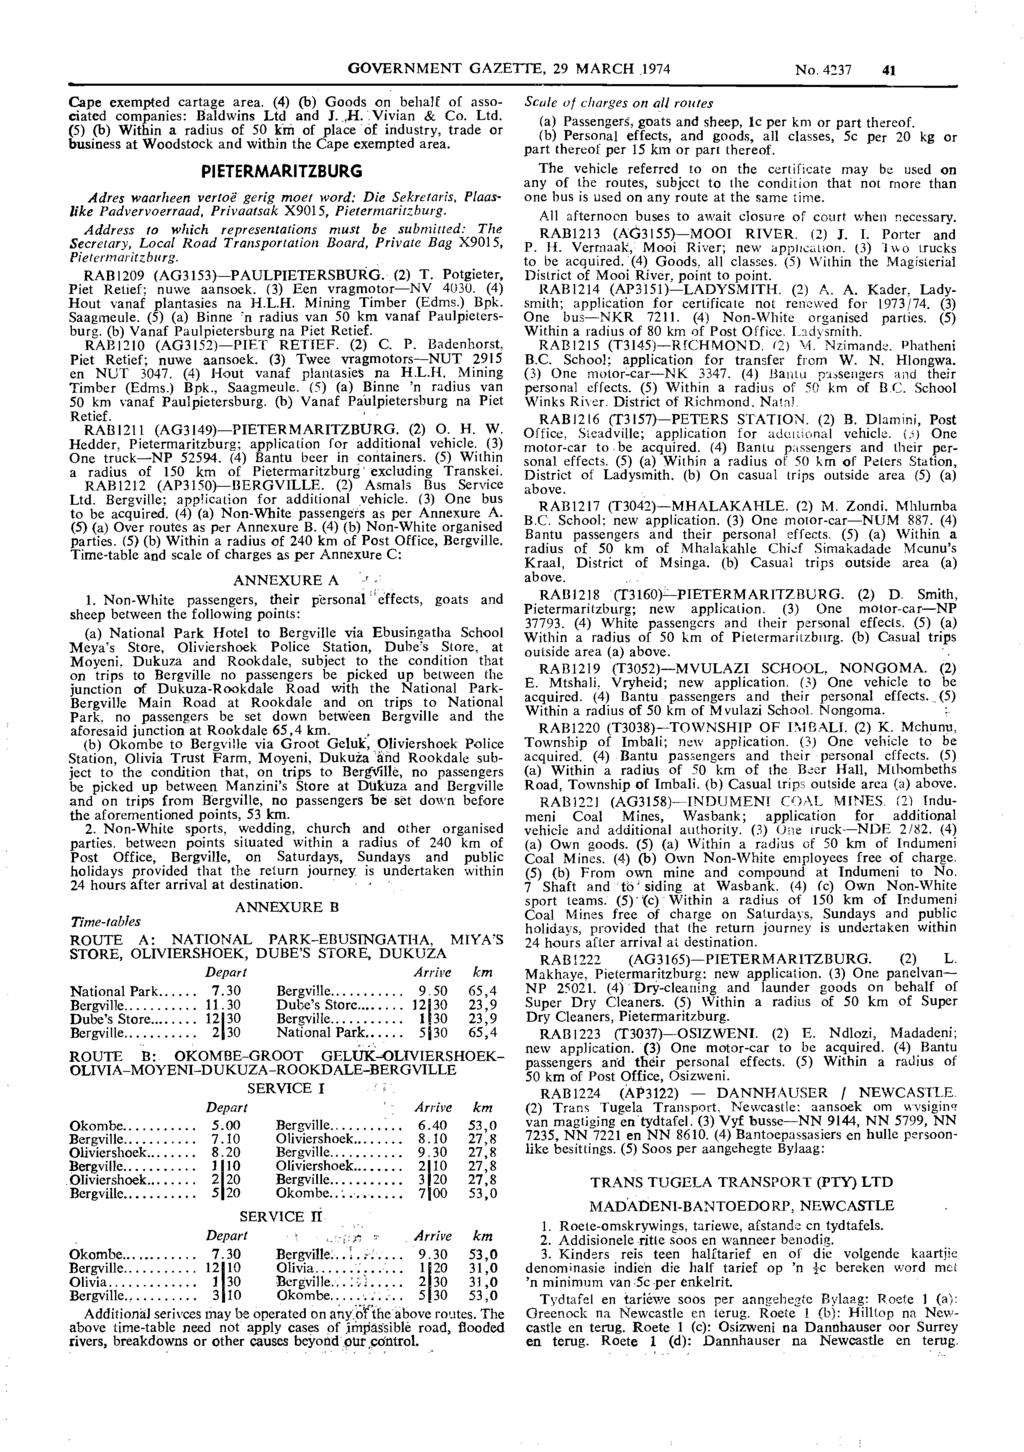 GOVERNMENT GAZETTE, 29 MARCH 1974 No 41-37 41 Cape exempted cartage area. (4) (b) Goods on behalf of associated companies: Baldwins Ltd 